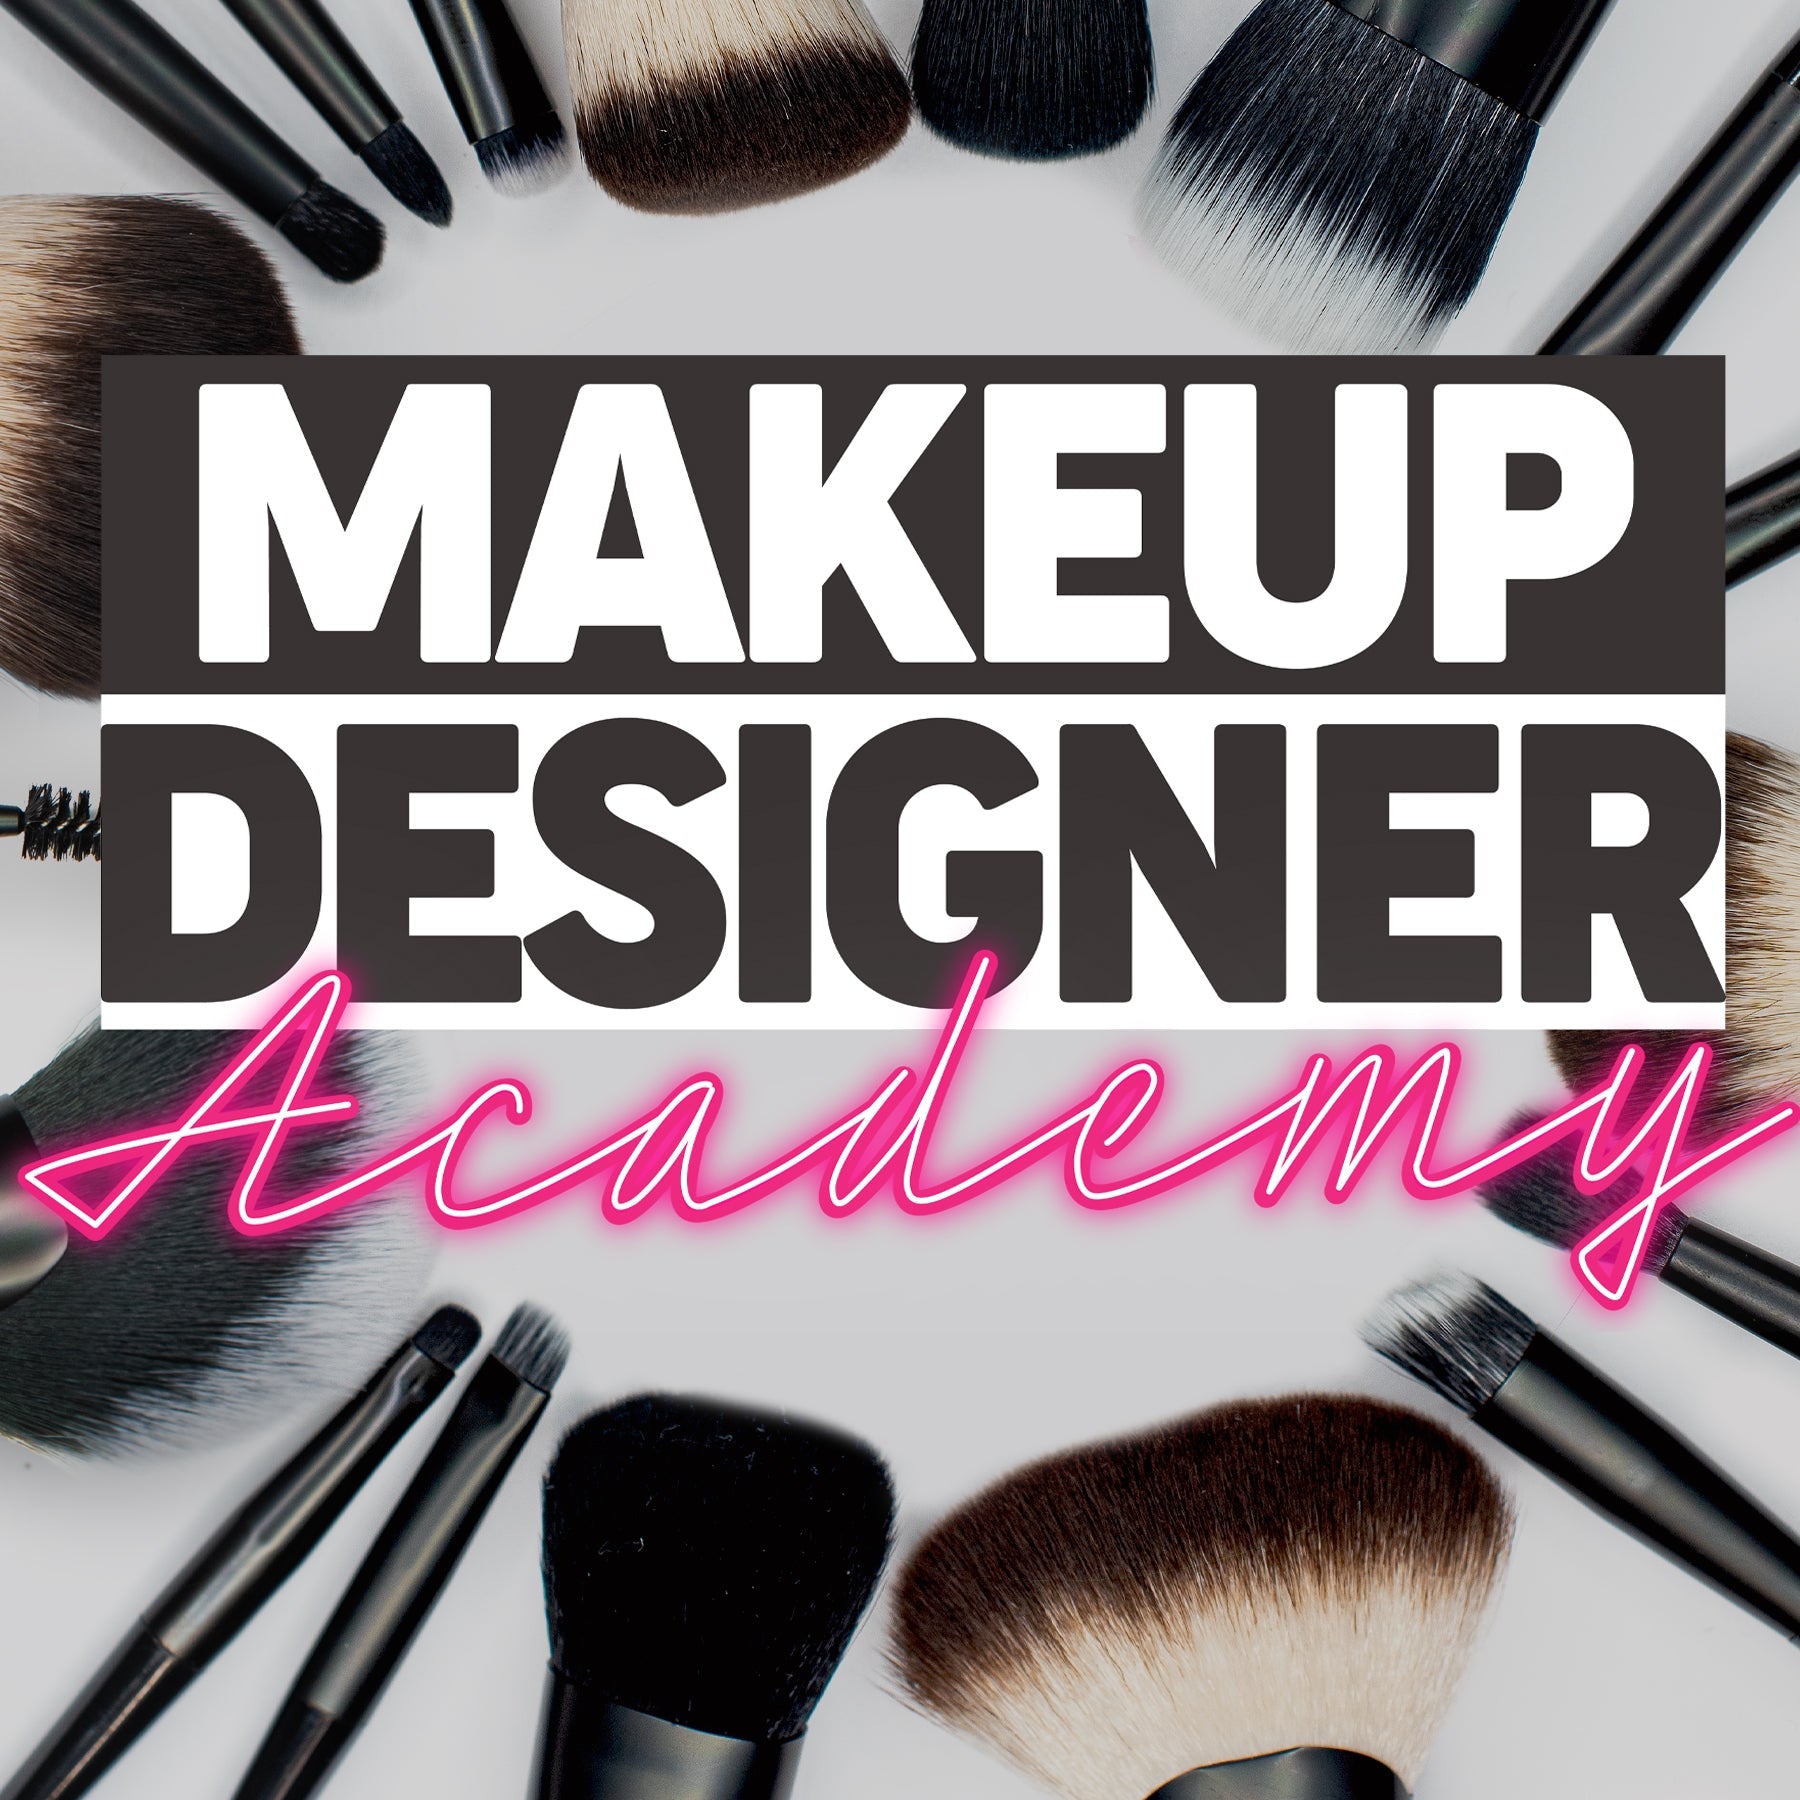 Makeup Designer Online Facechart Academy™ Extension